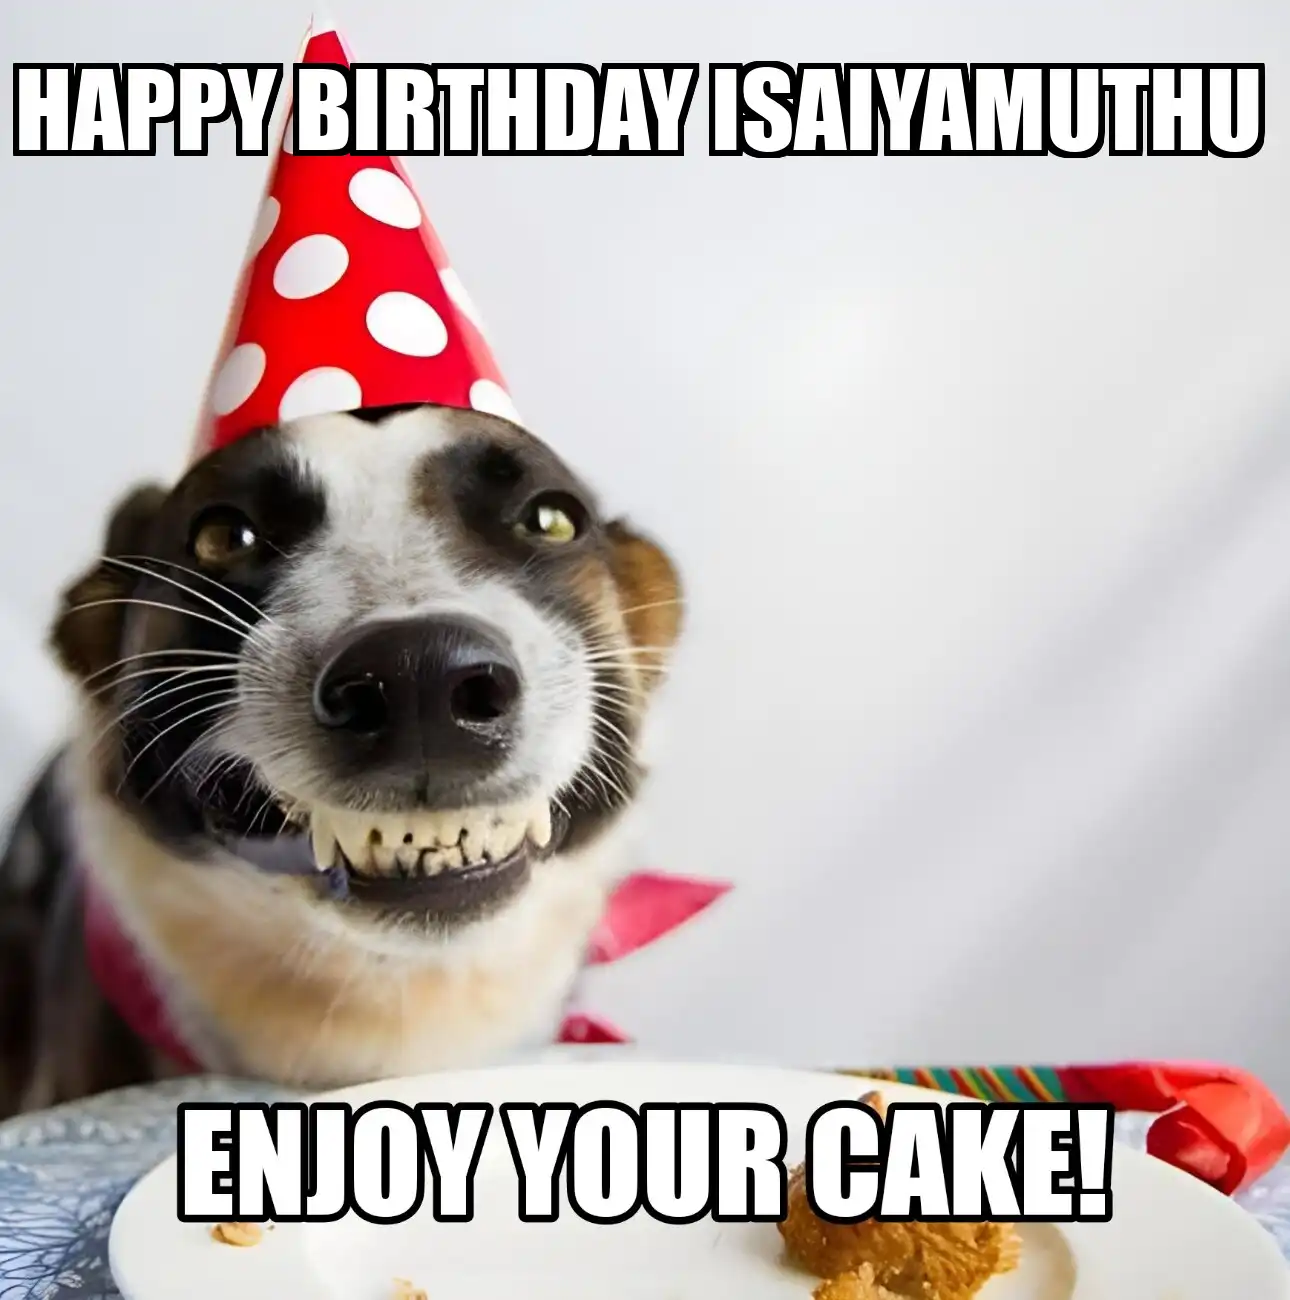 Happy Birthday Isaiyamuthu Enjoy Your Cake Dog Meme